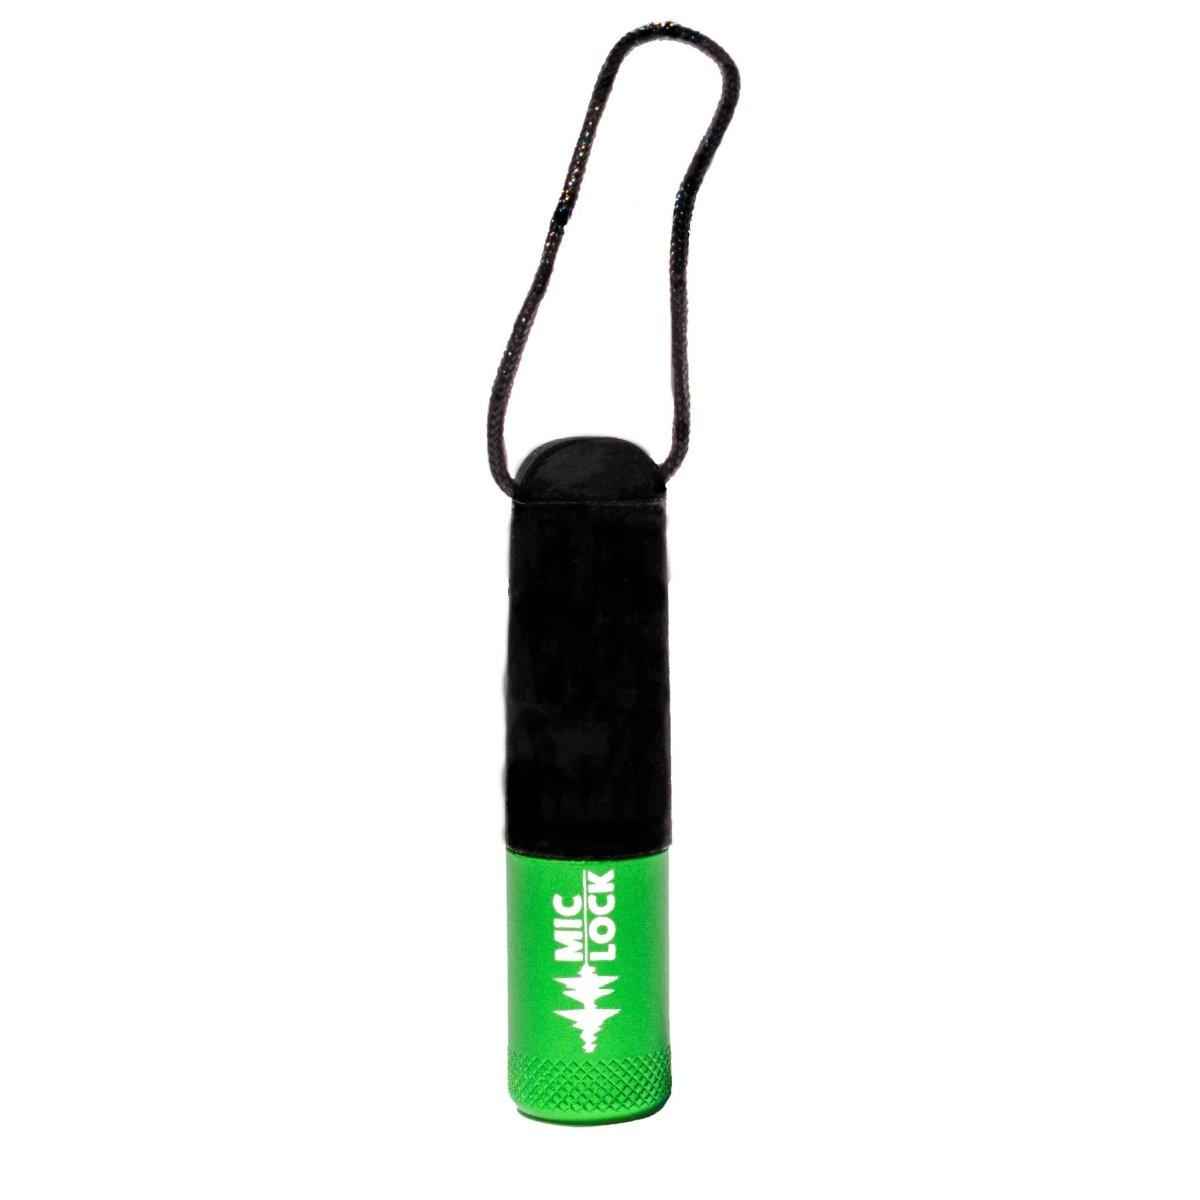 Mic-Lock 3.5mm Single-Ended Microphone Blocker- Metallic Green - Mic-Lock